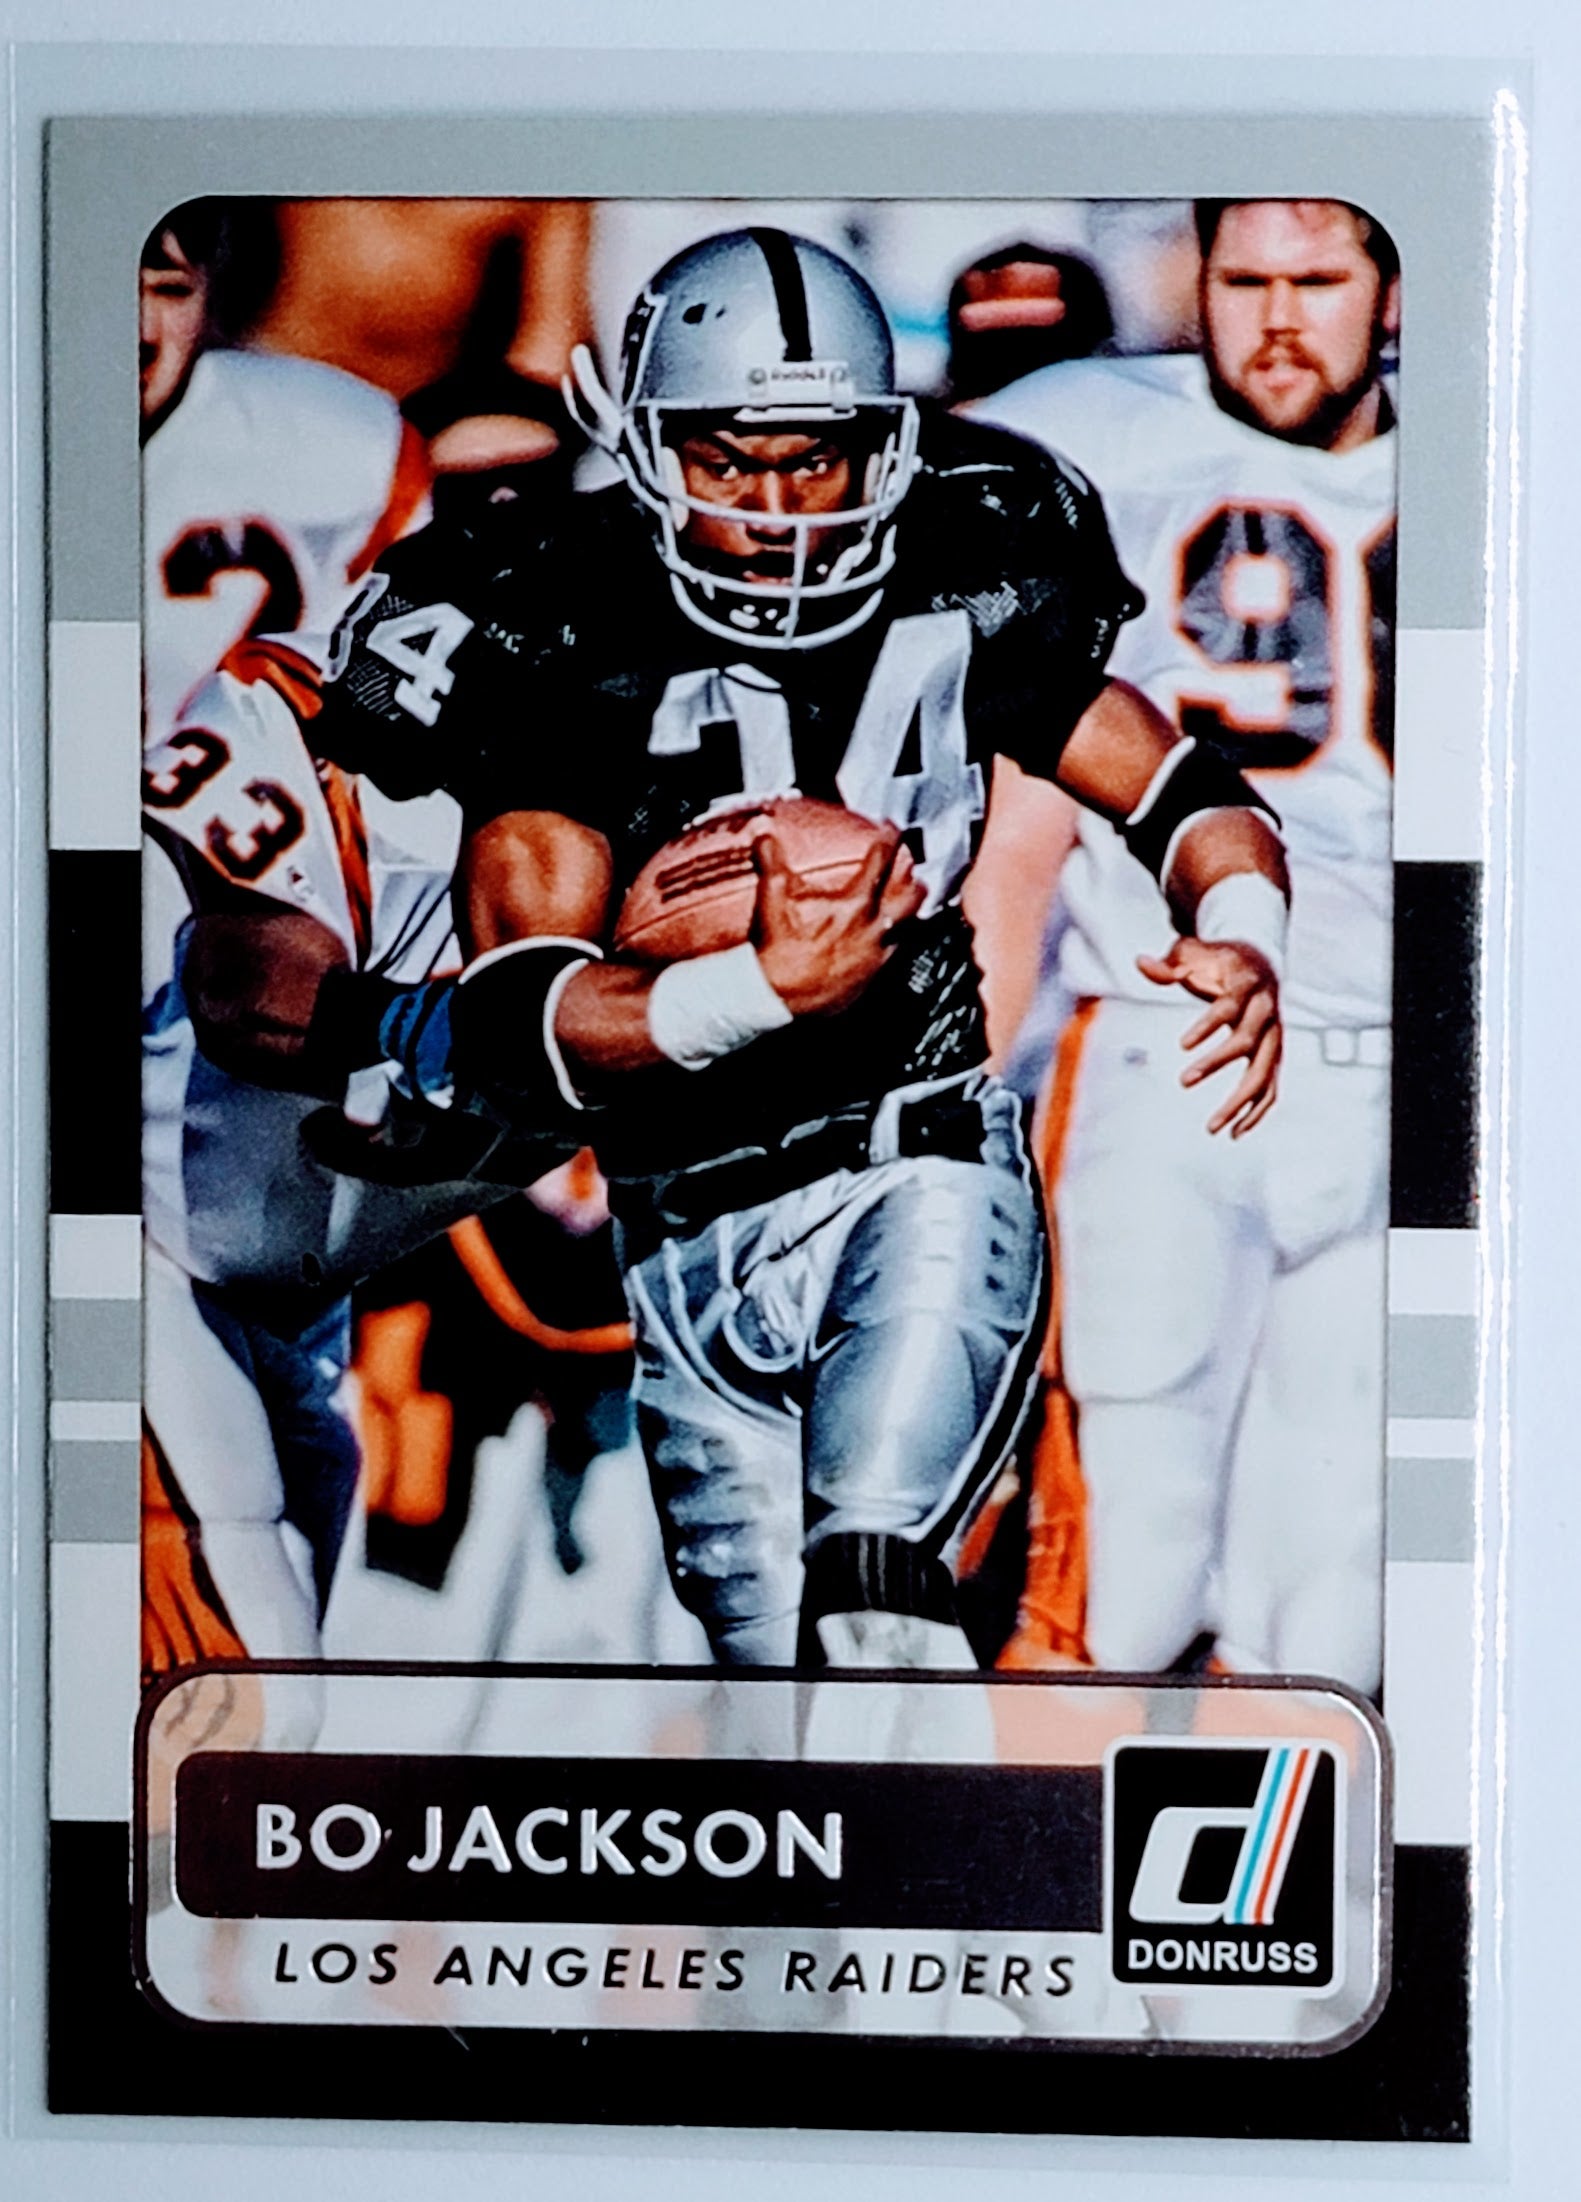 2015 Donruss Bo Jackson   Los Angeles Raiders Football Card  TH1CB simple Xclusive Collectibles   